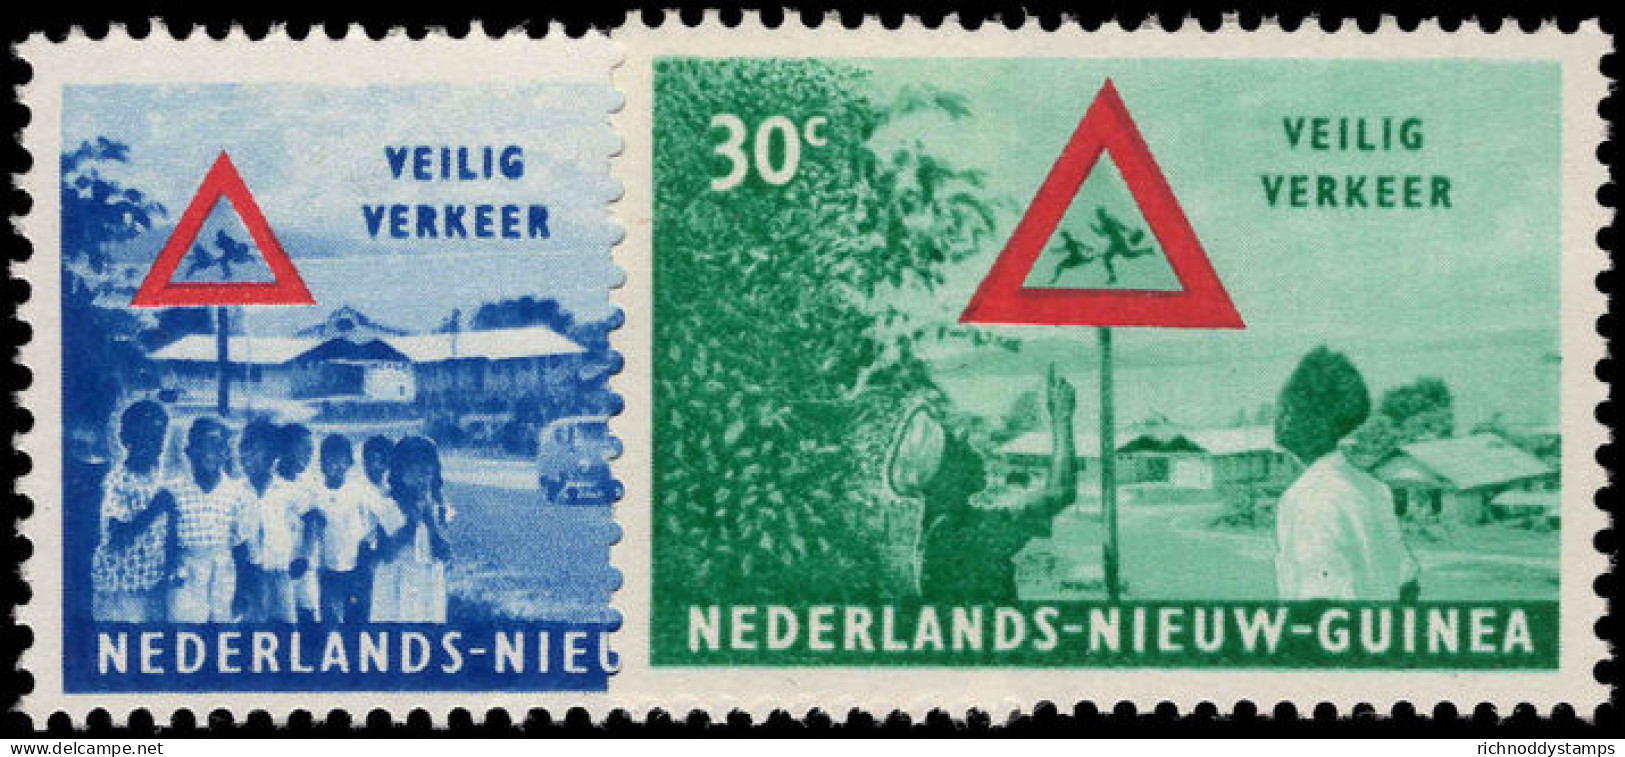 Netherlands New Guinea 1962 Road Safety Unmounted Mint. - Nouvelle Guinée Néerlandaise